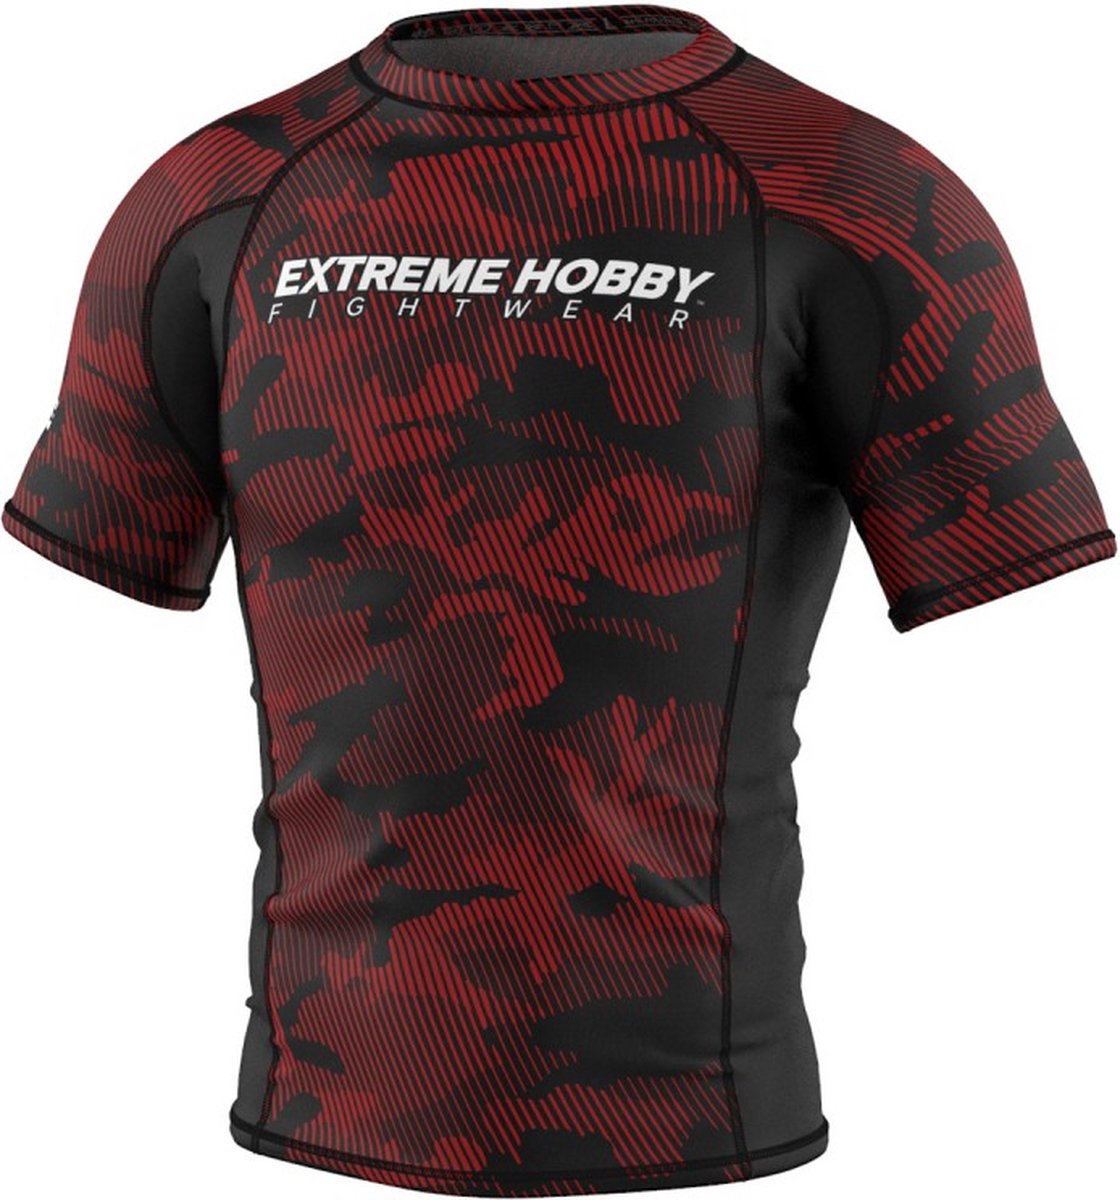 Extreme Hobby - Havoc Red - Rashguard Short Sleeve - Compression Shirt - Rood, Zwaart - Maat XXL